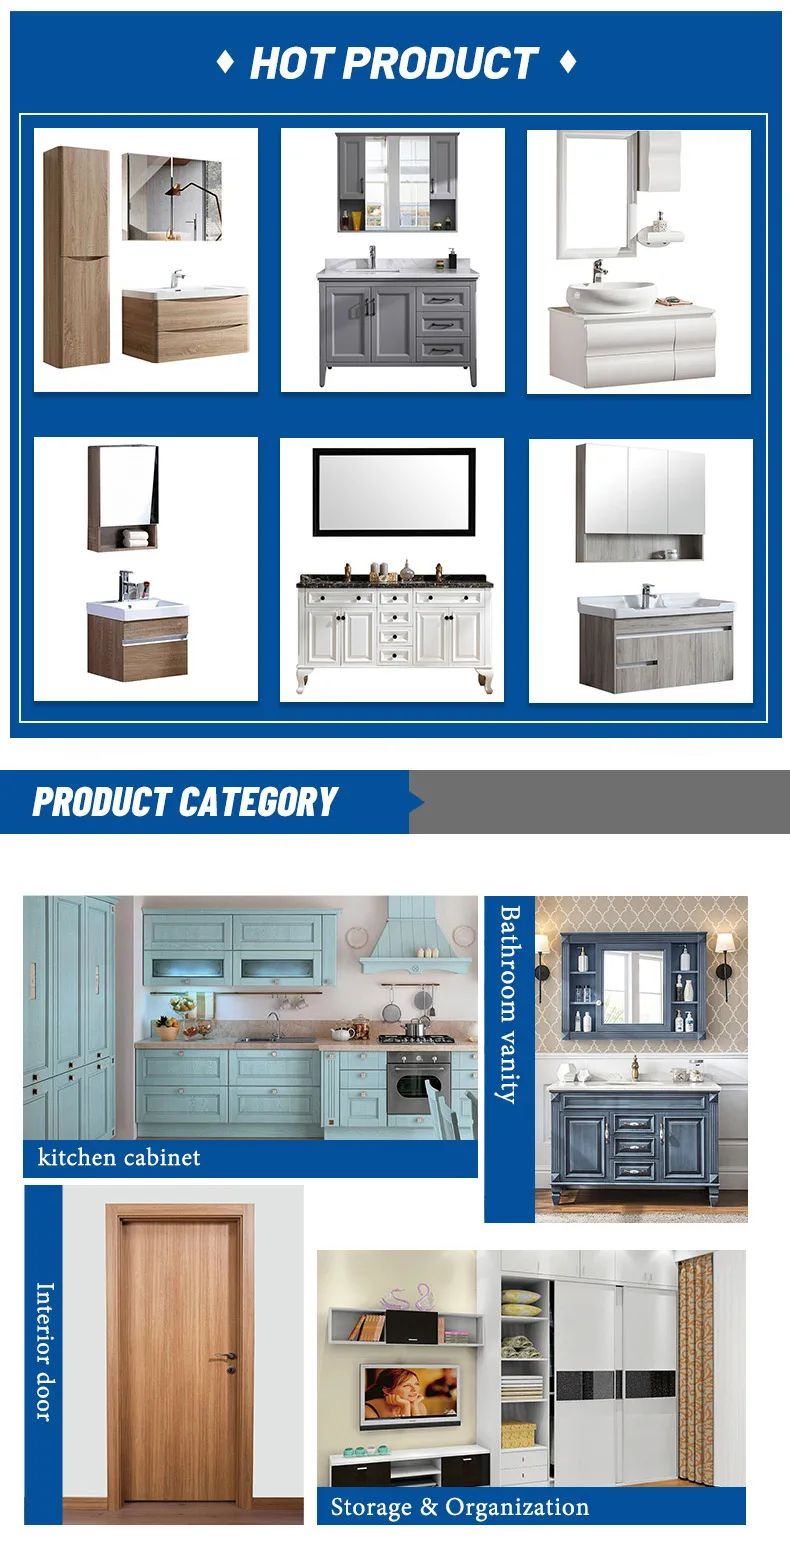 Y&r Furniture pvc bathroom cabinet for business